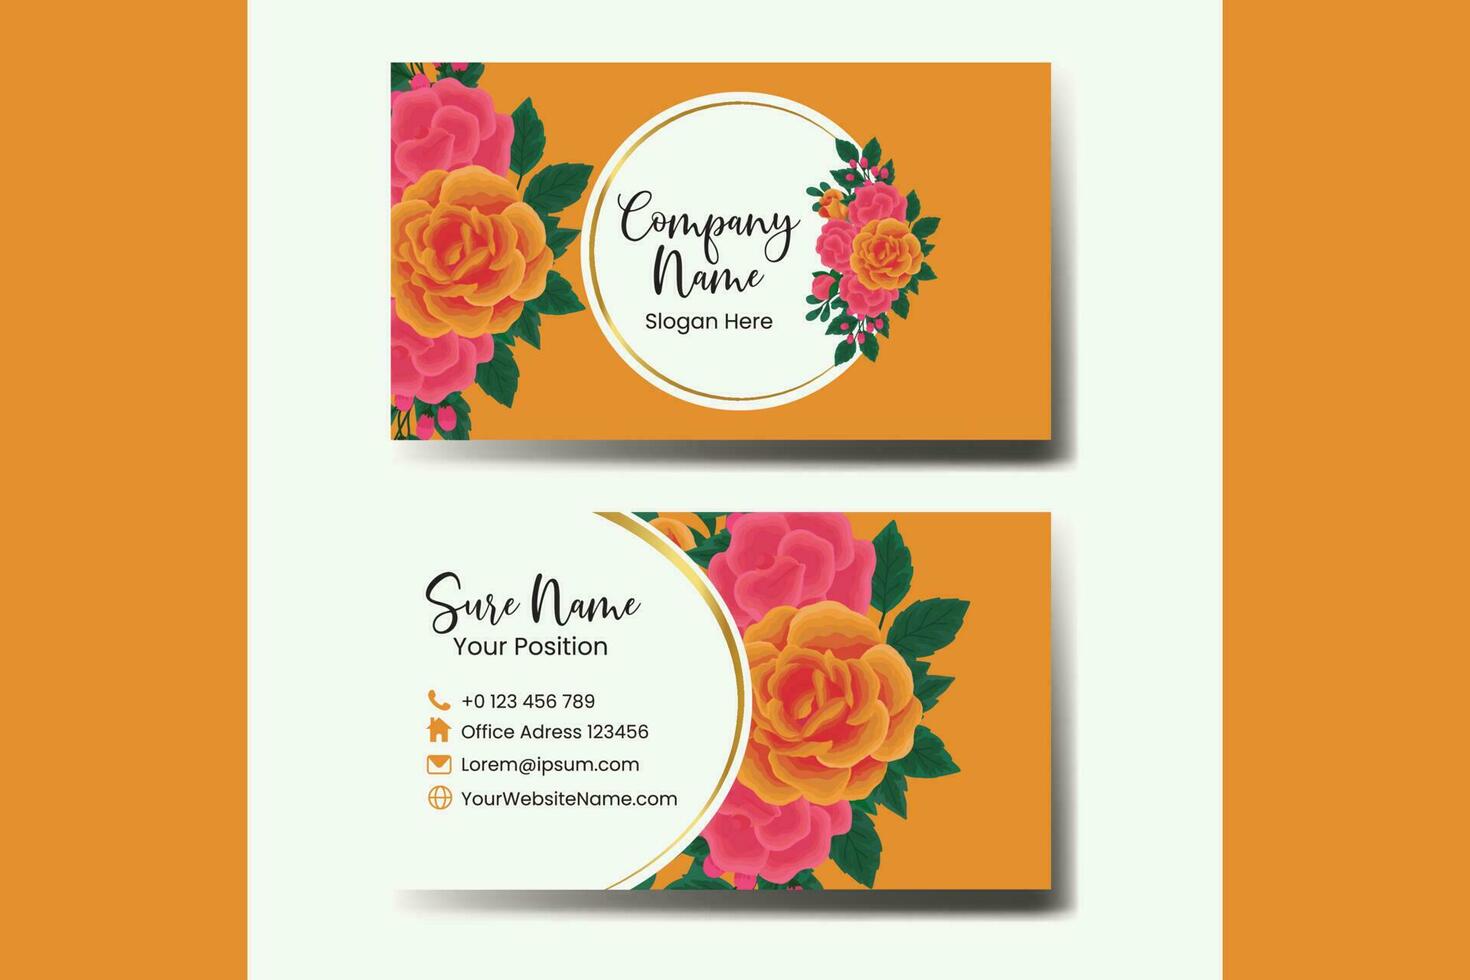 negocio tarjeta modelo naranja Rosa flor .doble cara azul colores. plano diseño vector ilustración. papelería diseño